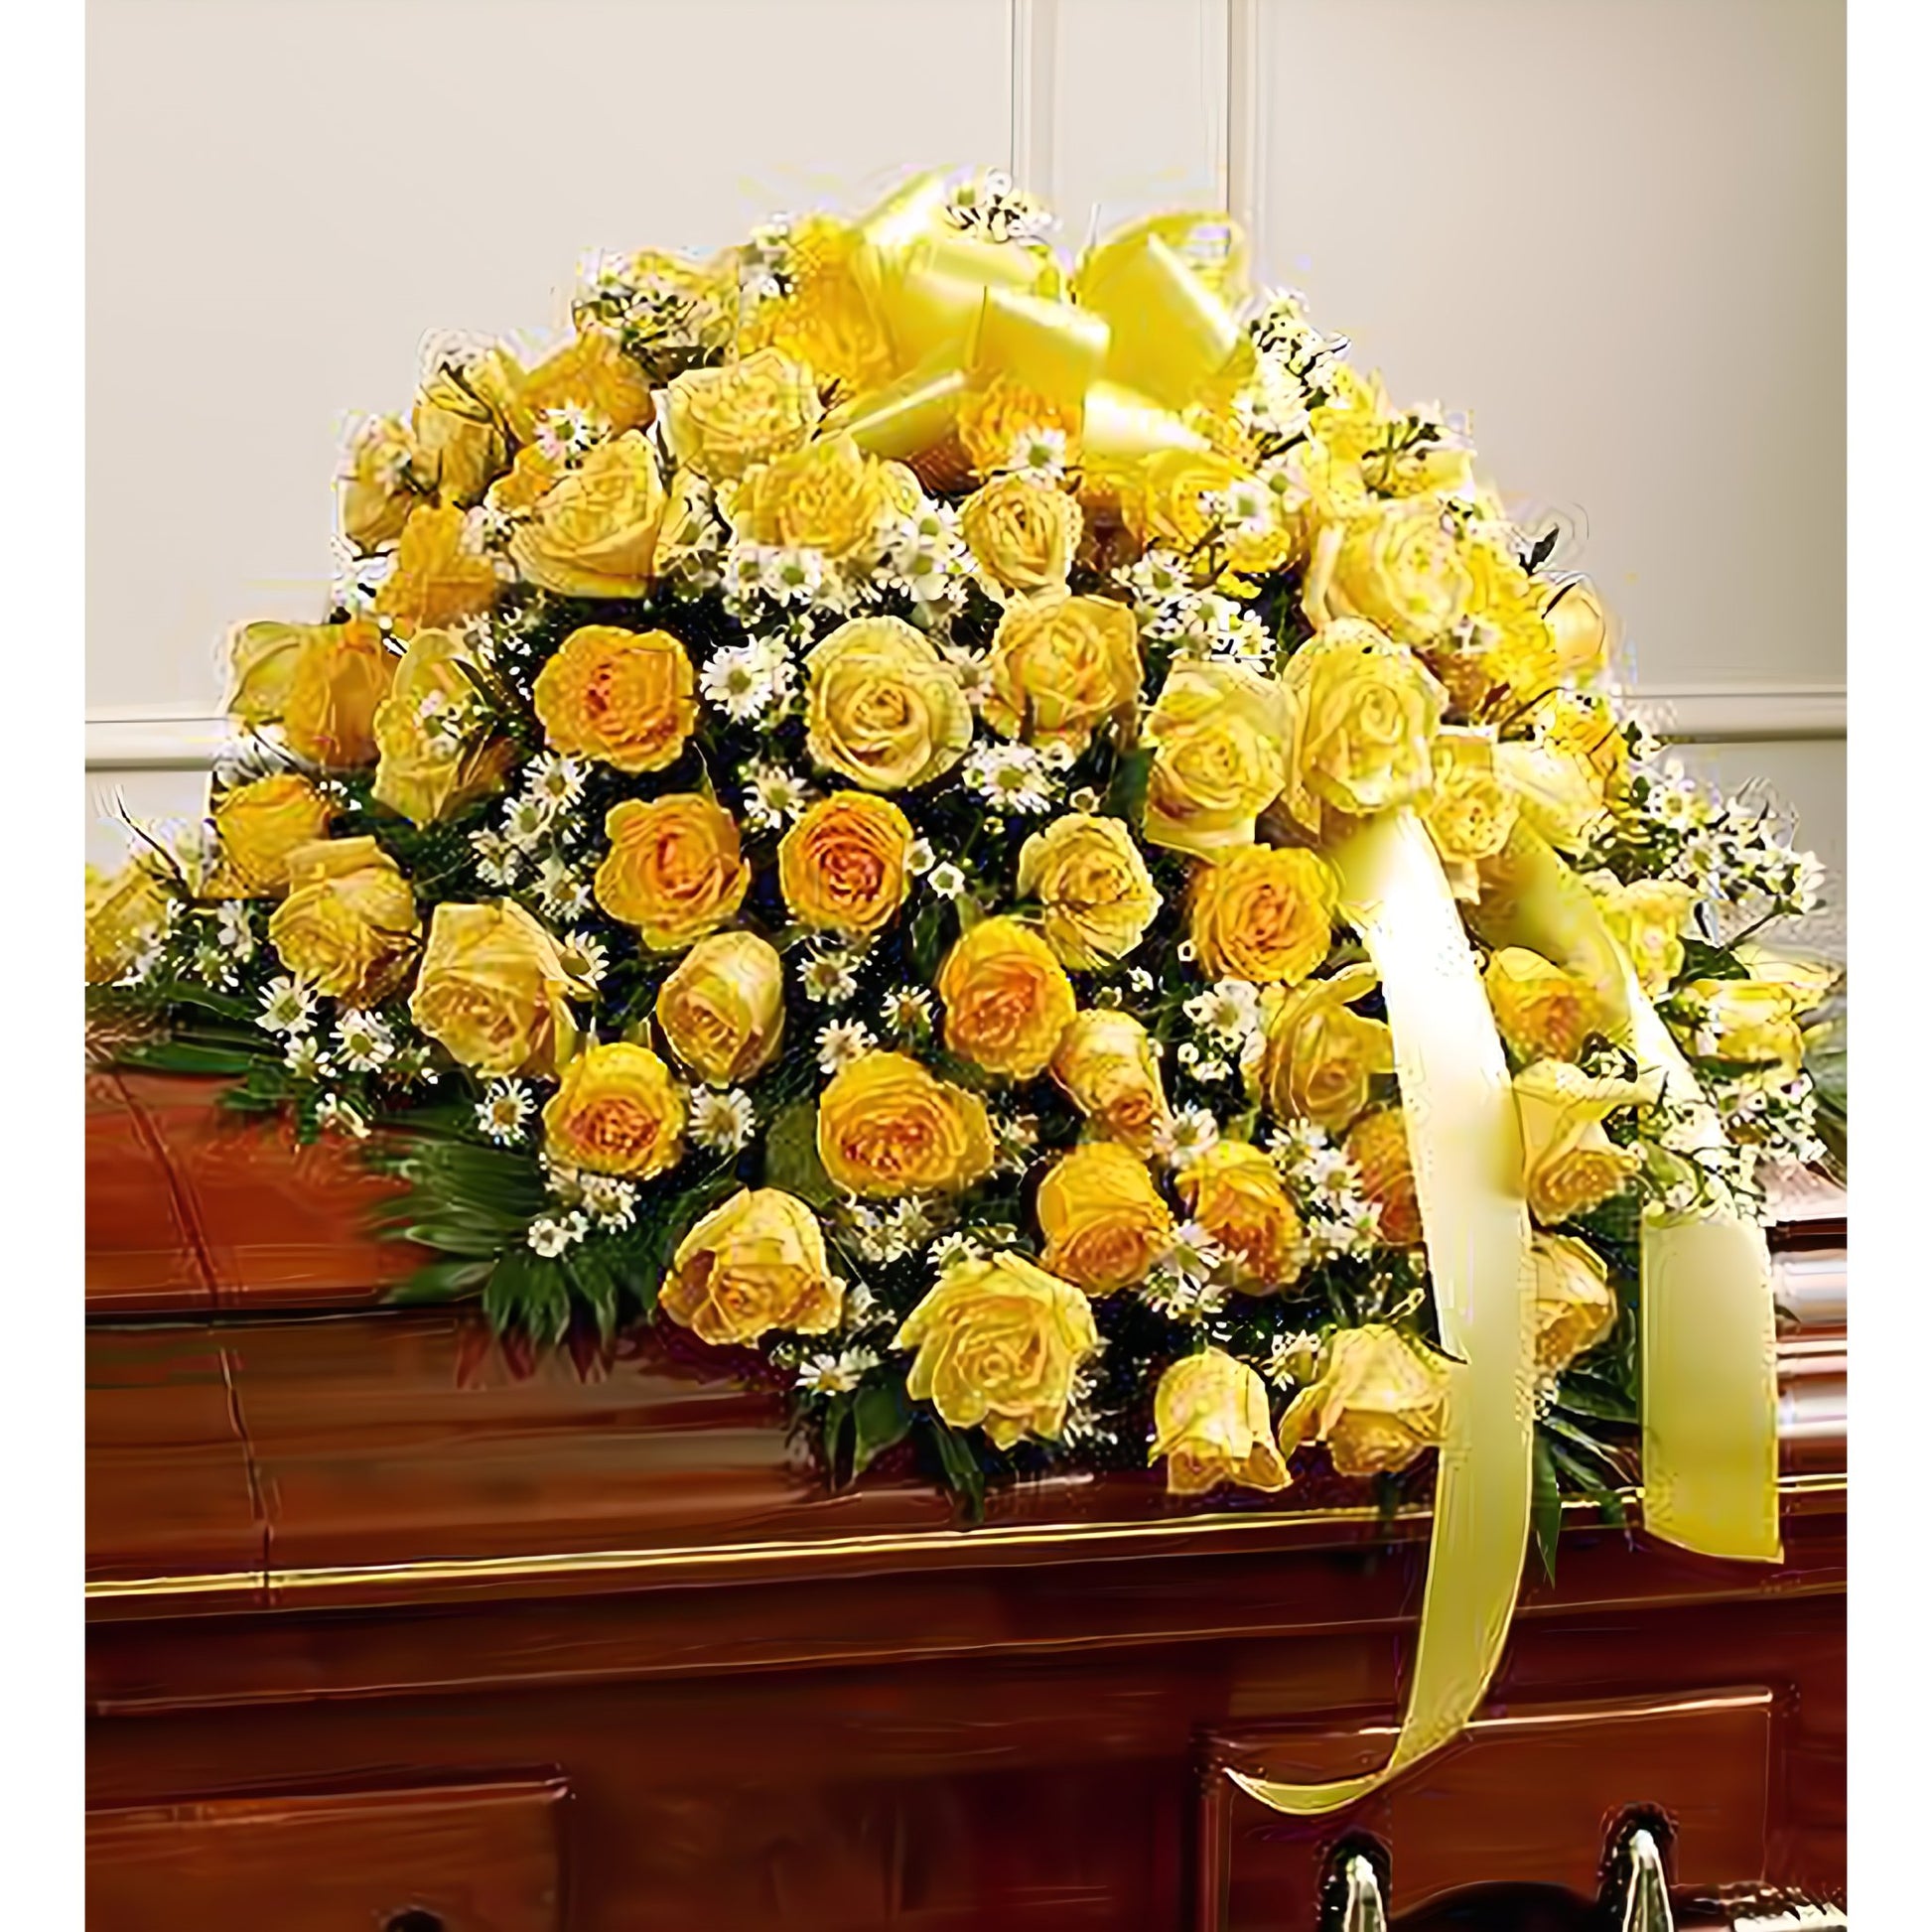 Cherished Memories Rose Half Casket Cover - Yellow - Floral Arrangement - Flower Delivery Brooklyn